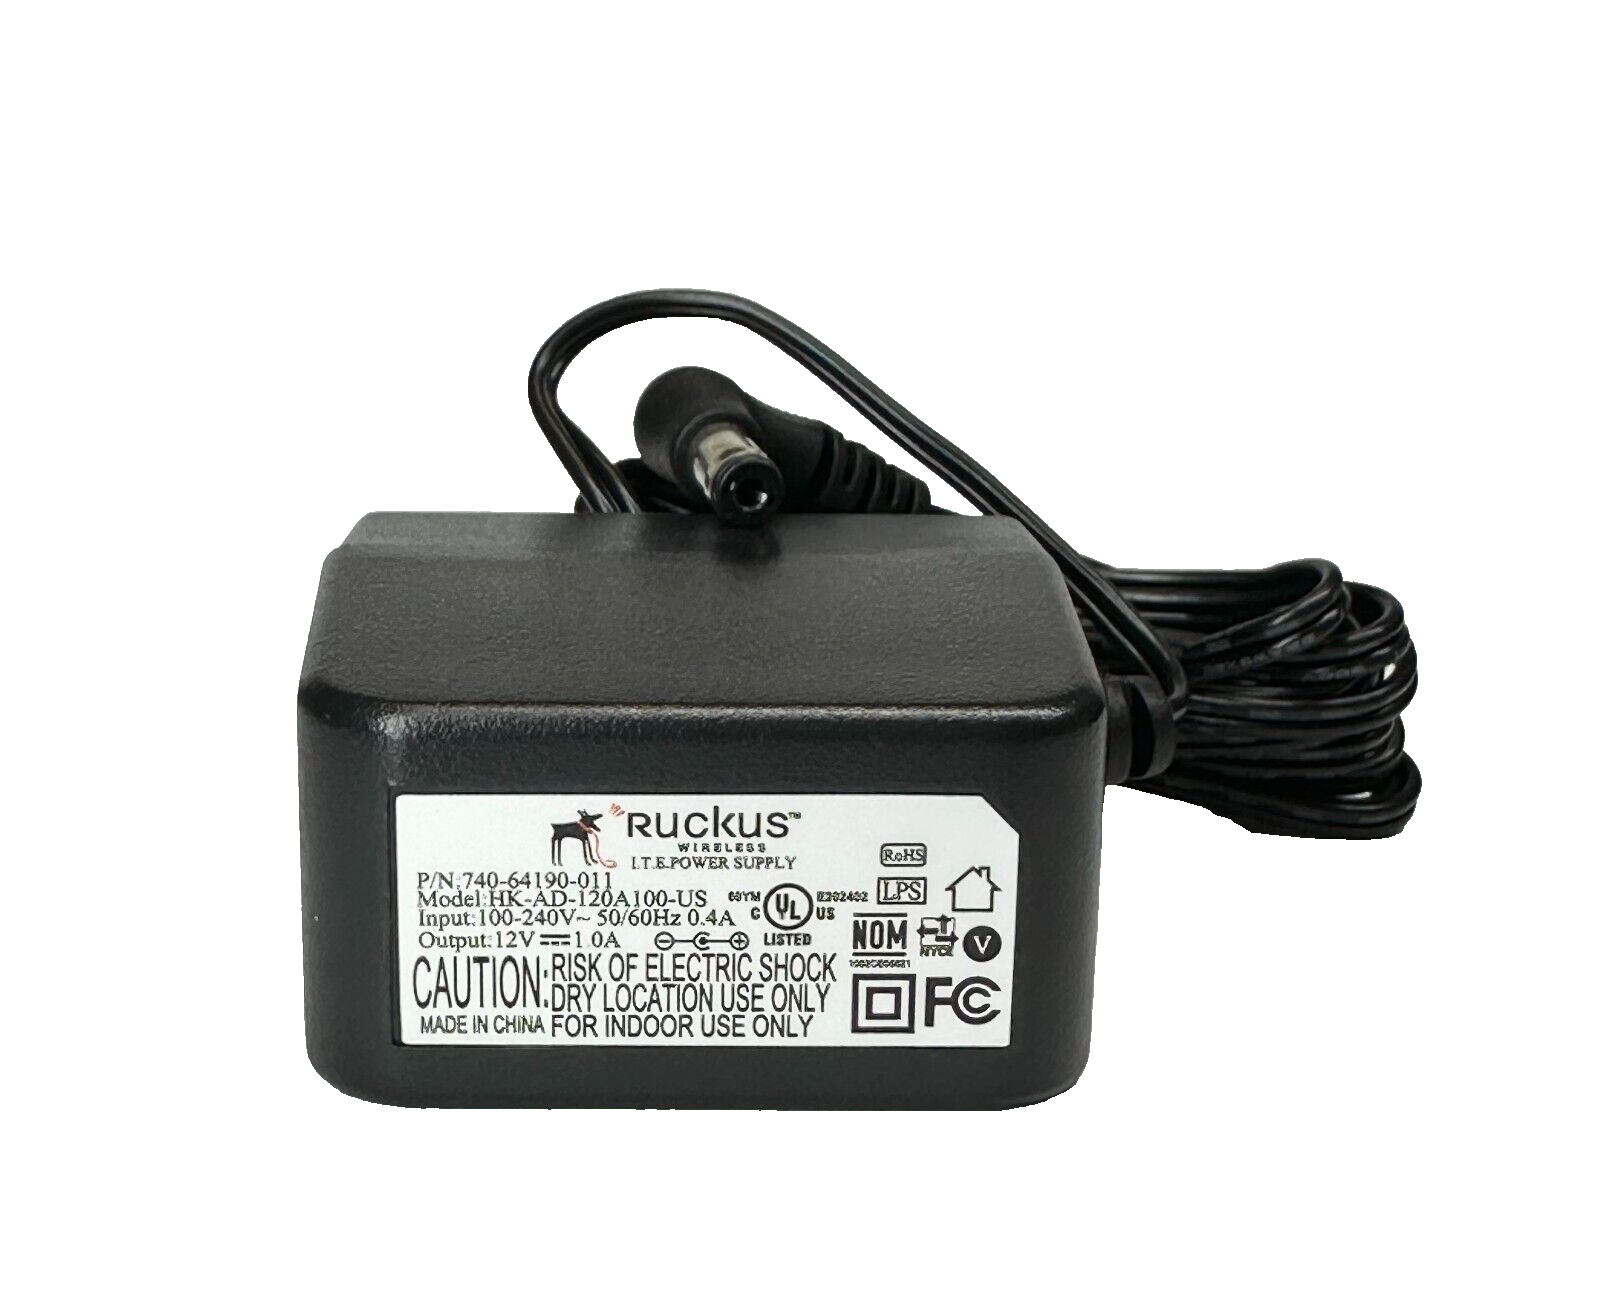 *Brand NEW*12VDC 1.0A MPN 740-64190-001 Model HK-AD-120A100-US Ruckus Power Supply